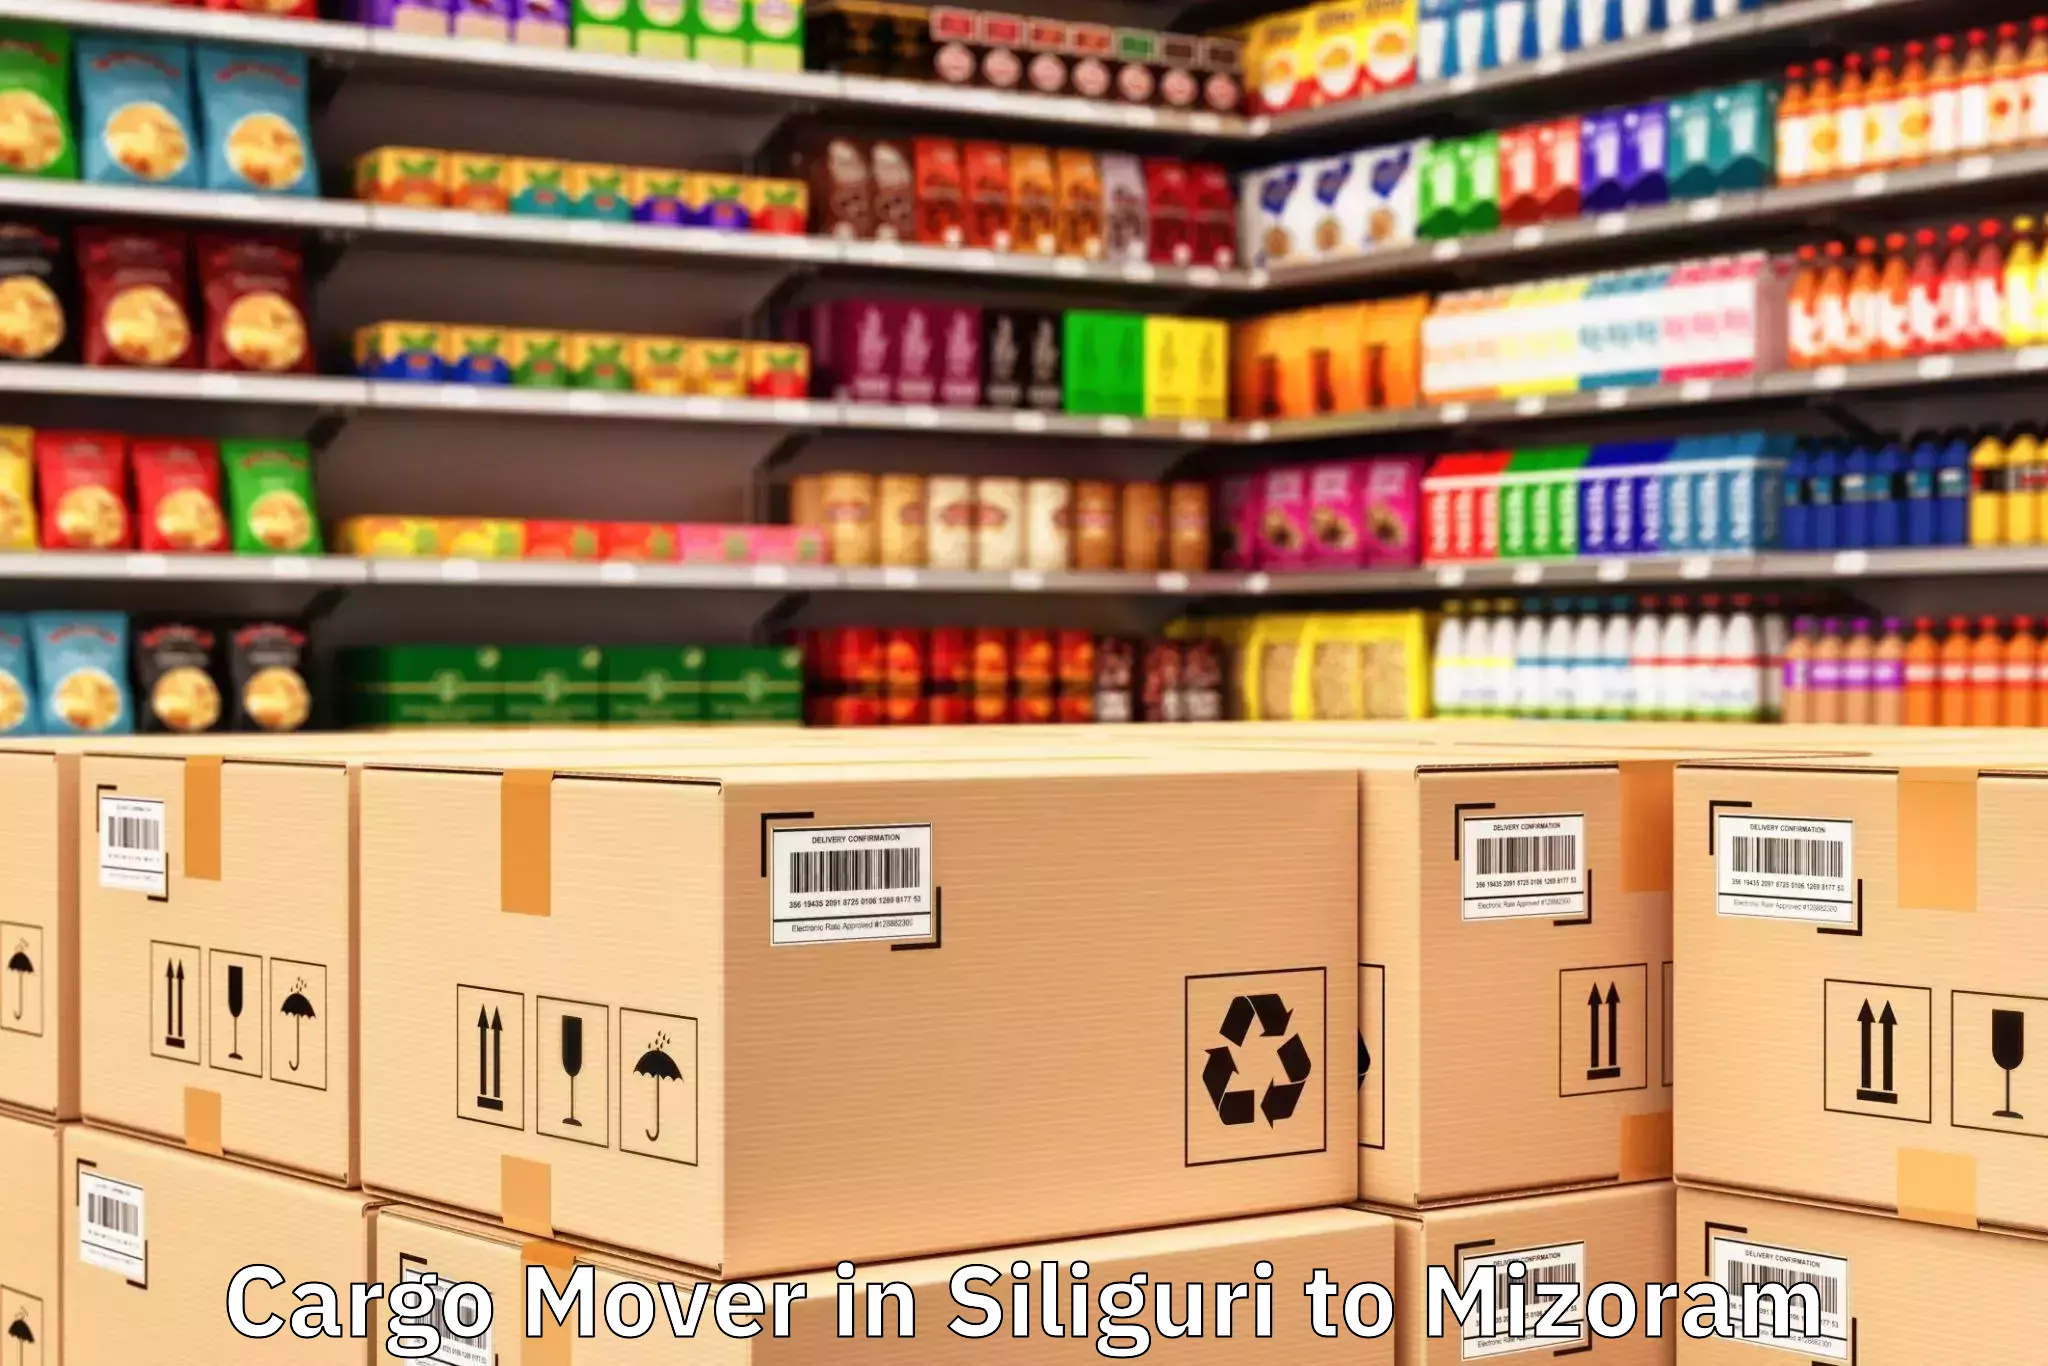 Top Siliguri to Mizoram Cargo Mover Available